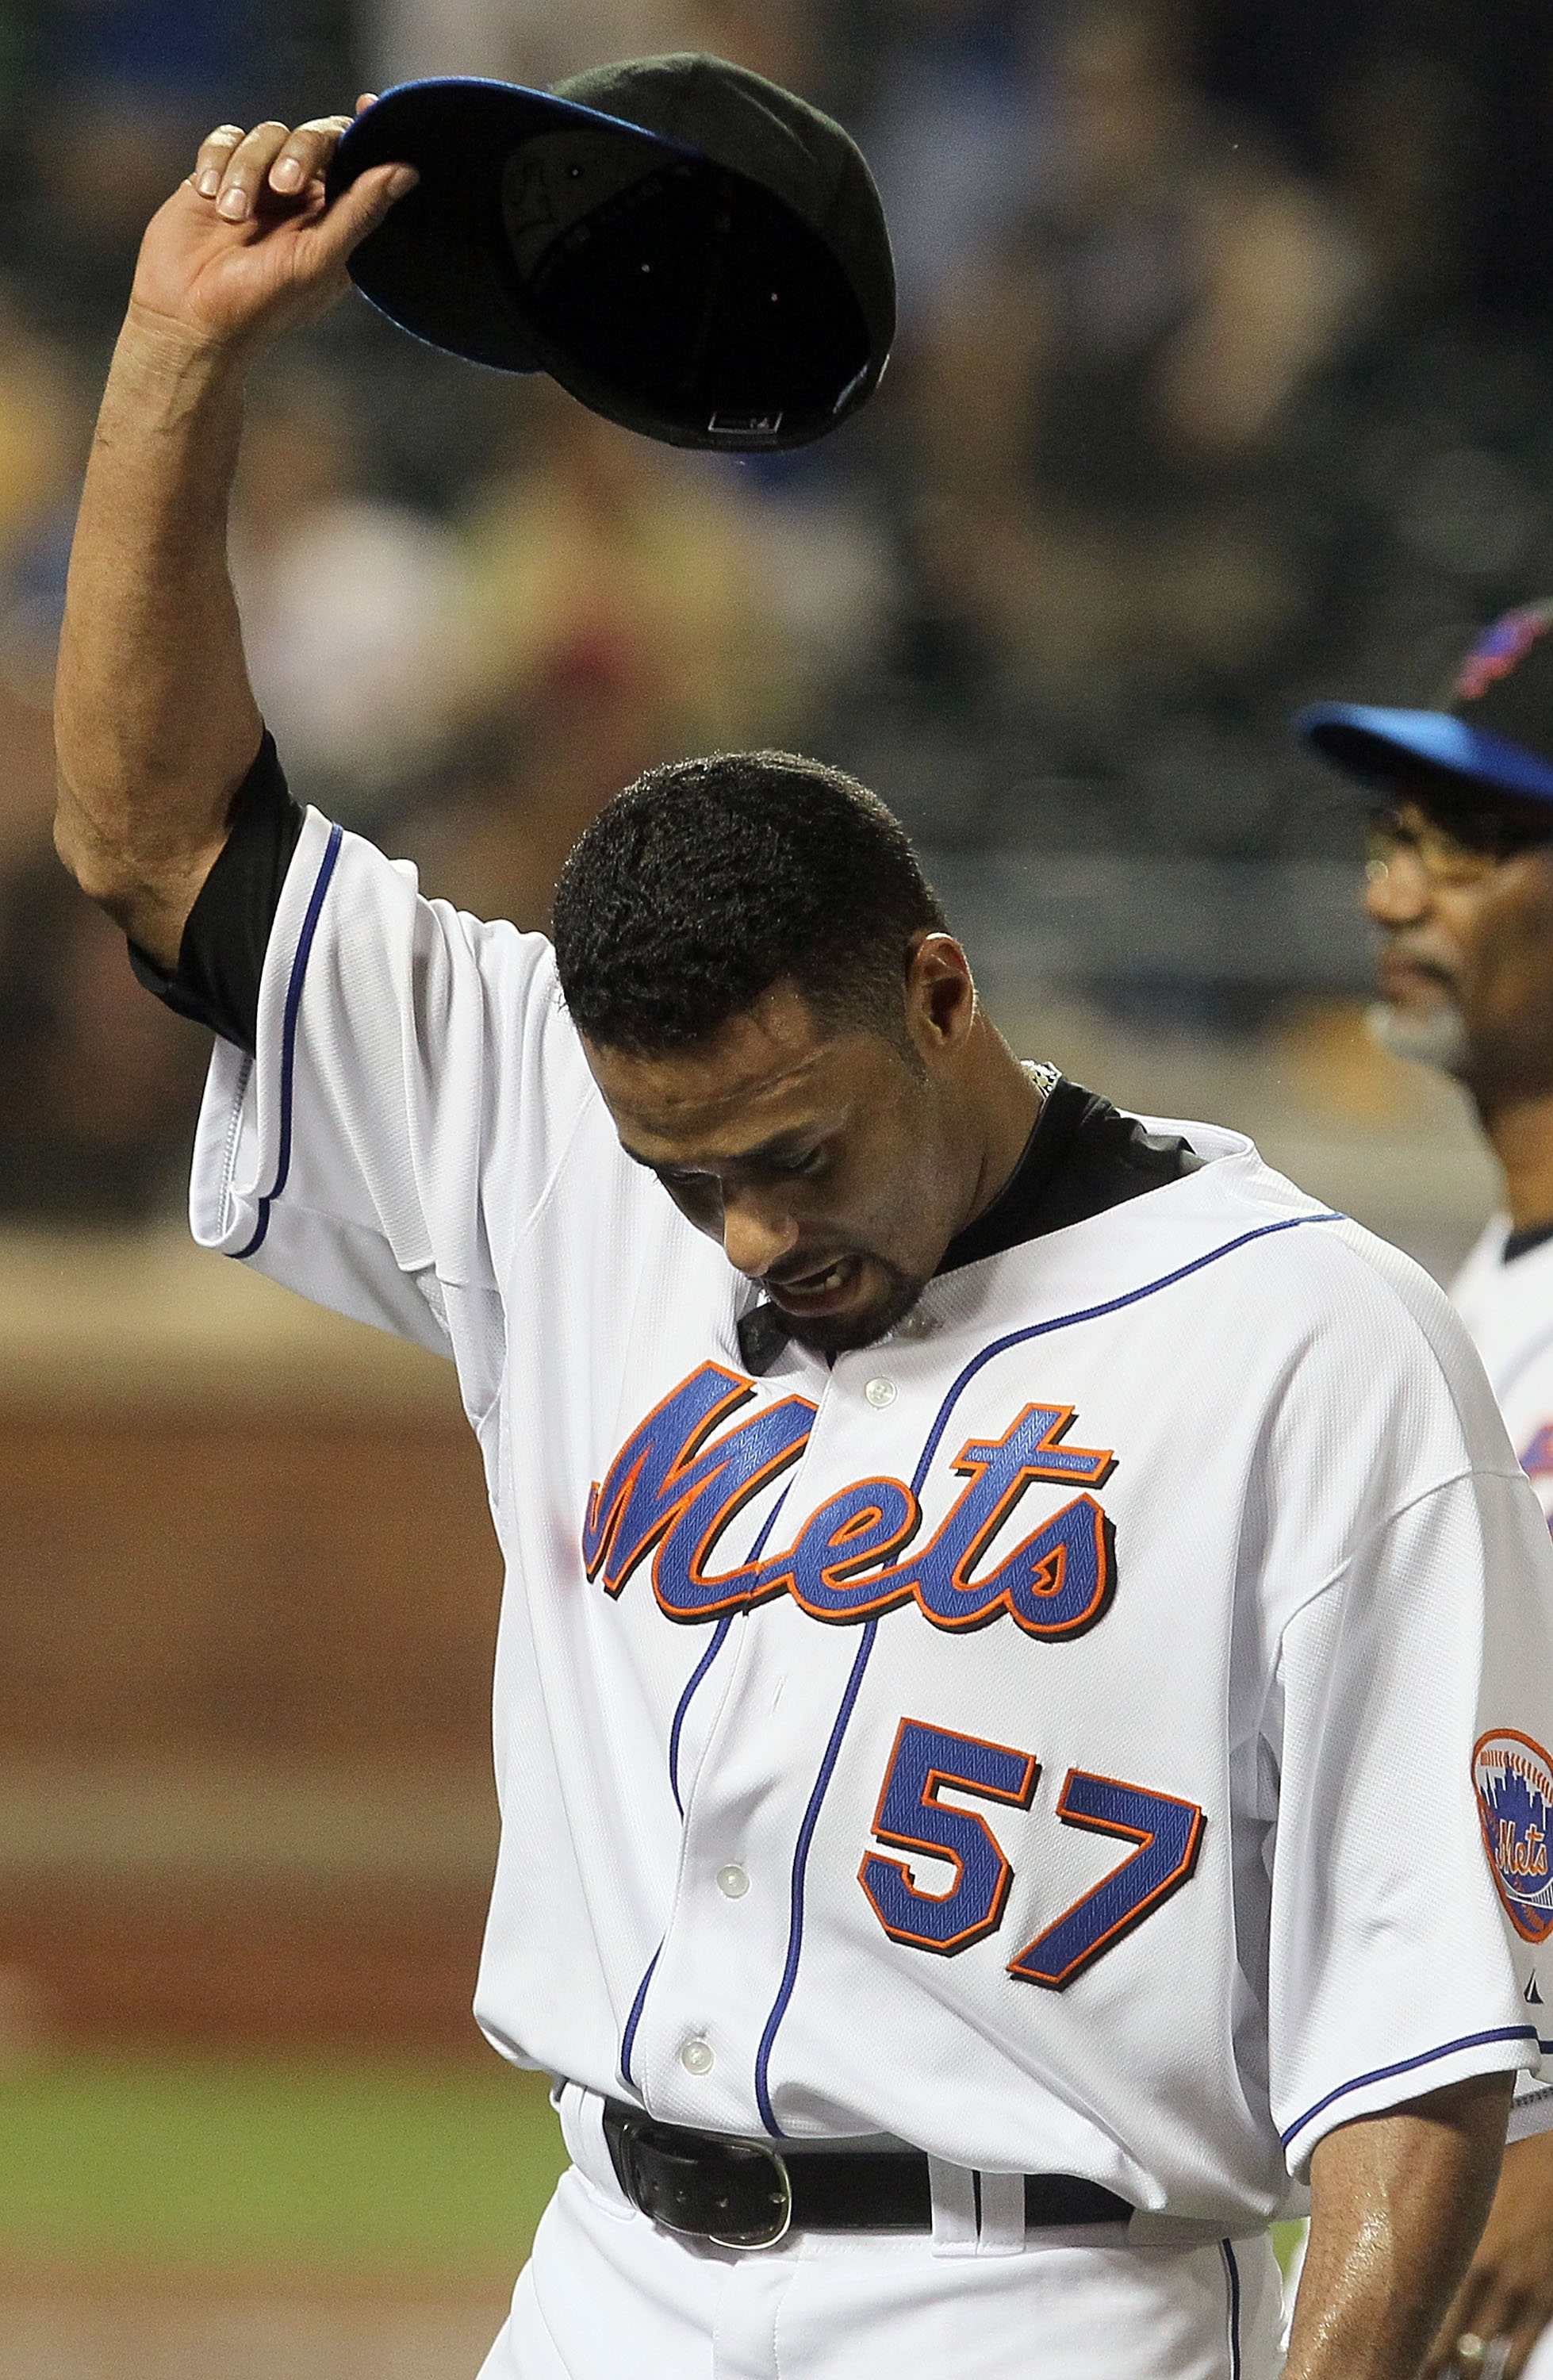 New York Mets: A Look at Johan Santana's Fall from Baseball Glory